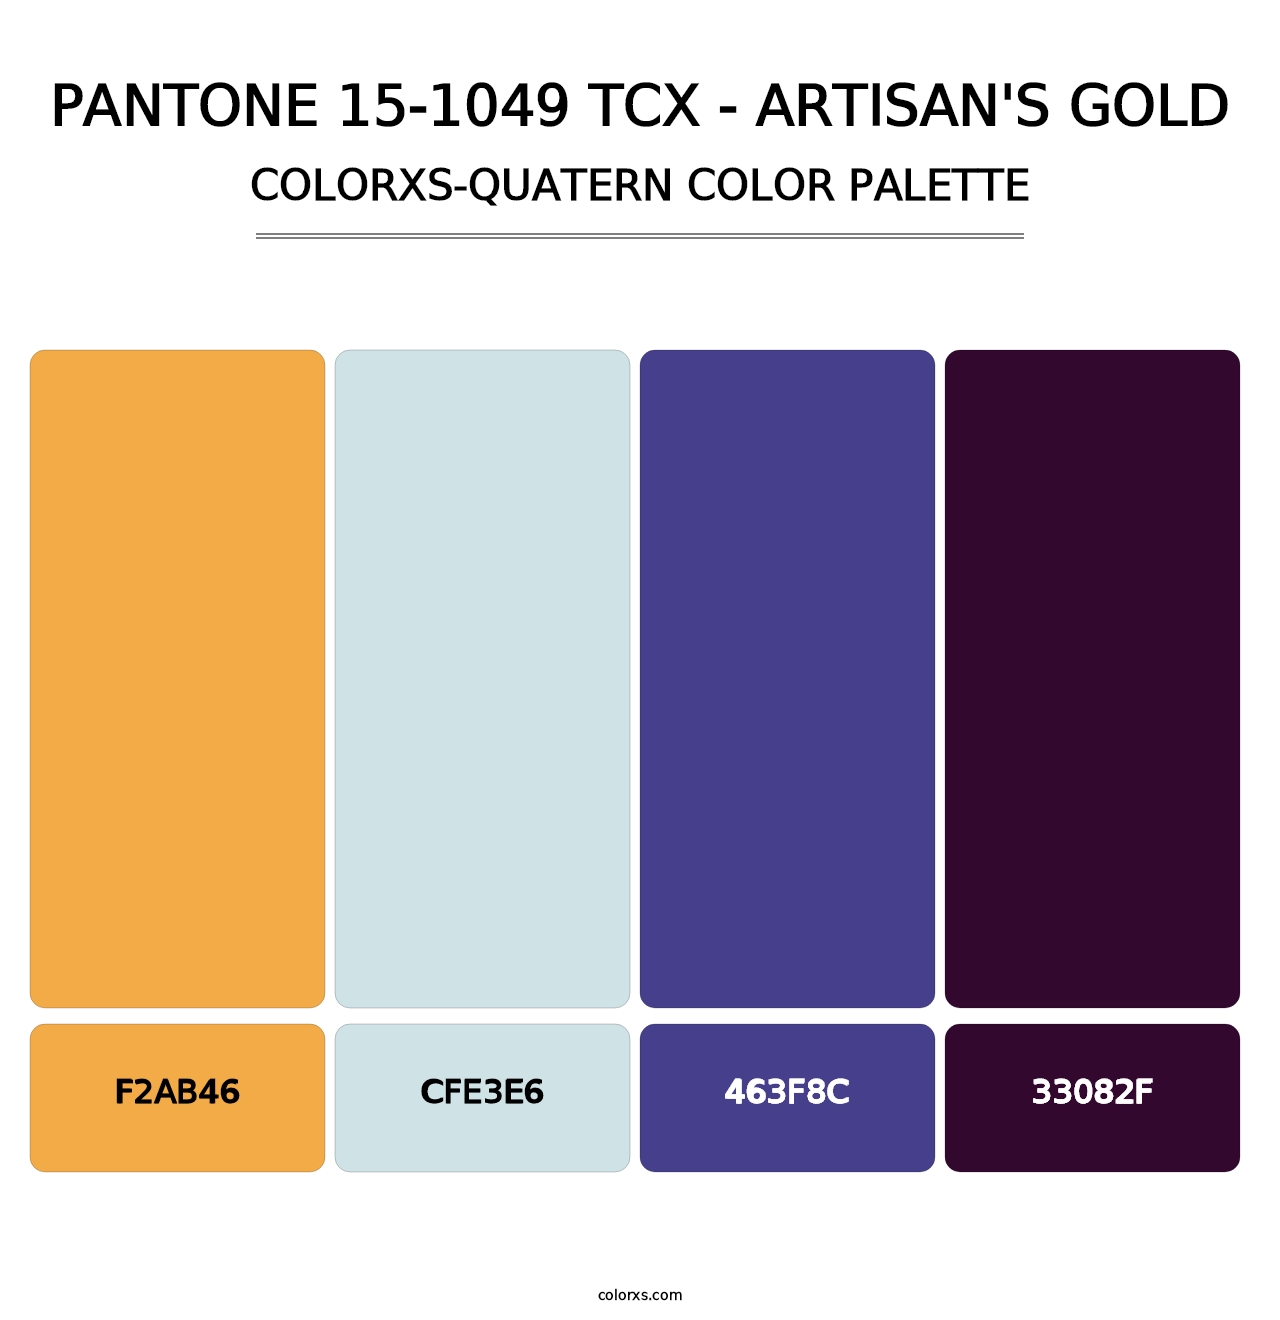 PANTONE 15-1049 TCX - Artisan's Gold - Colorxs Quatern Palette